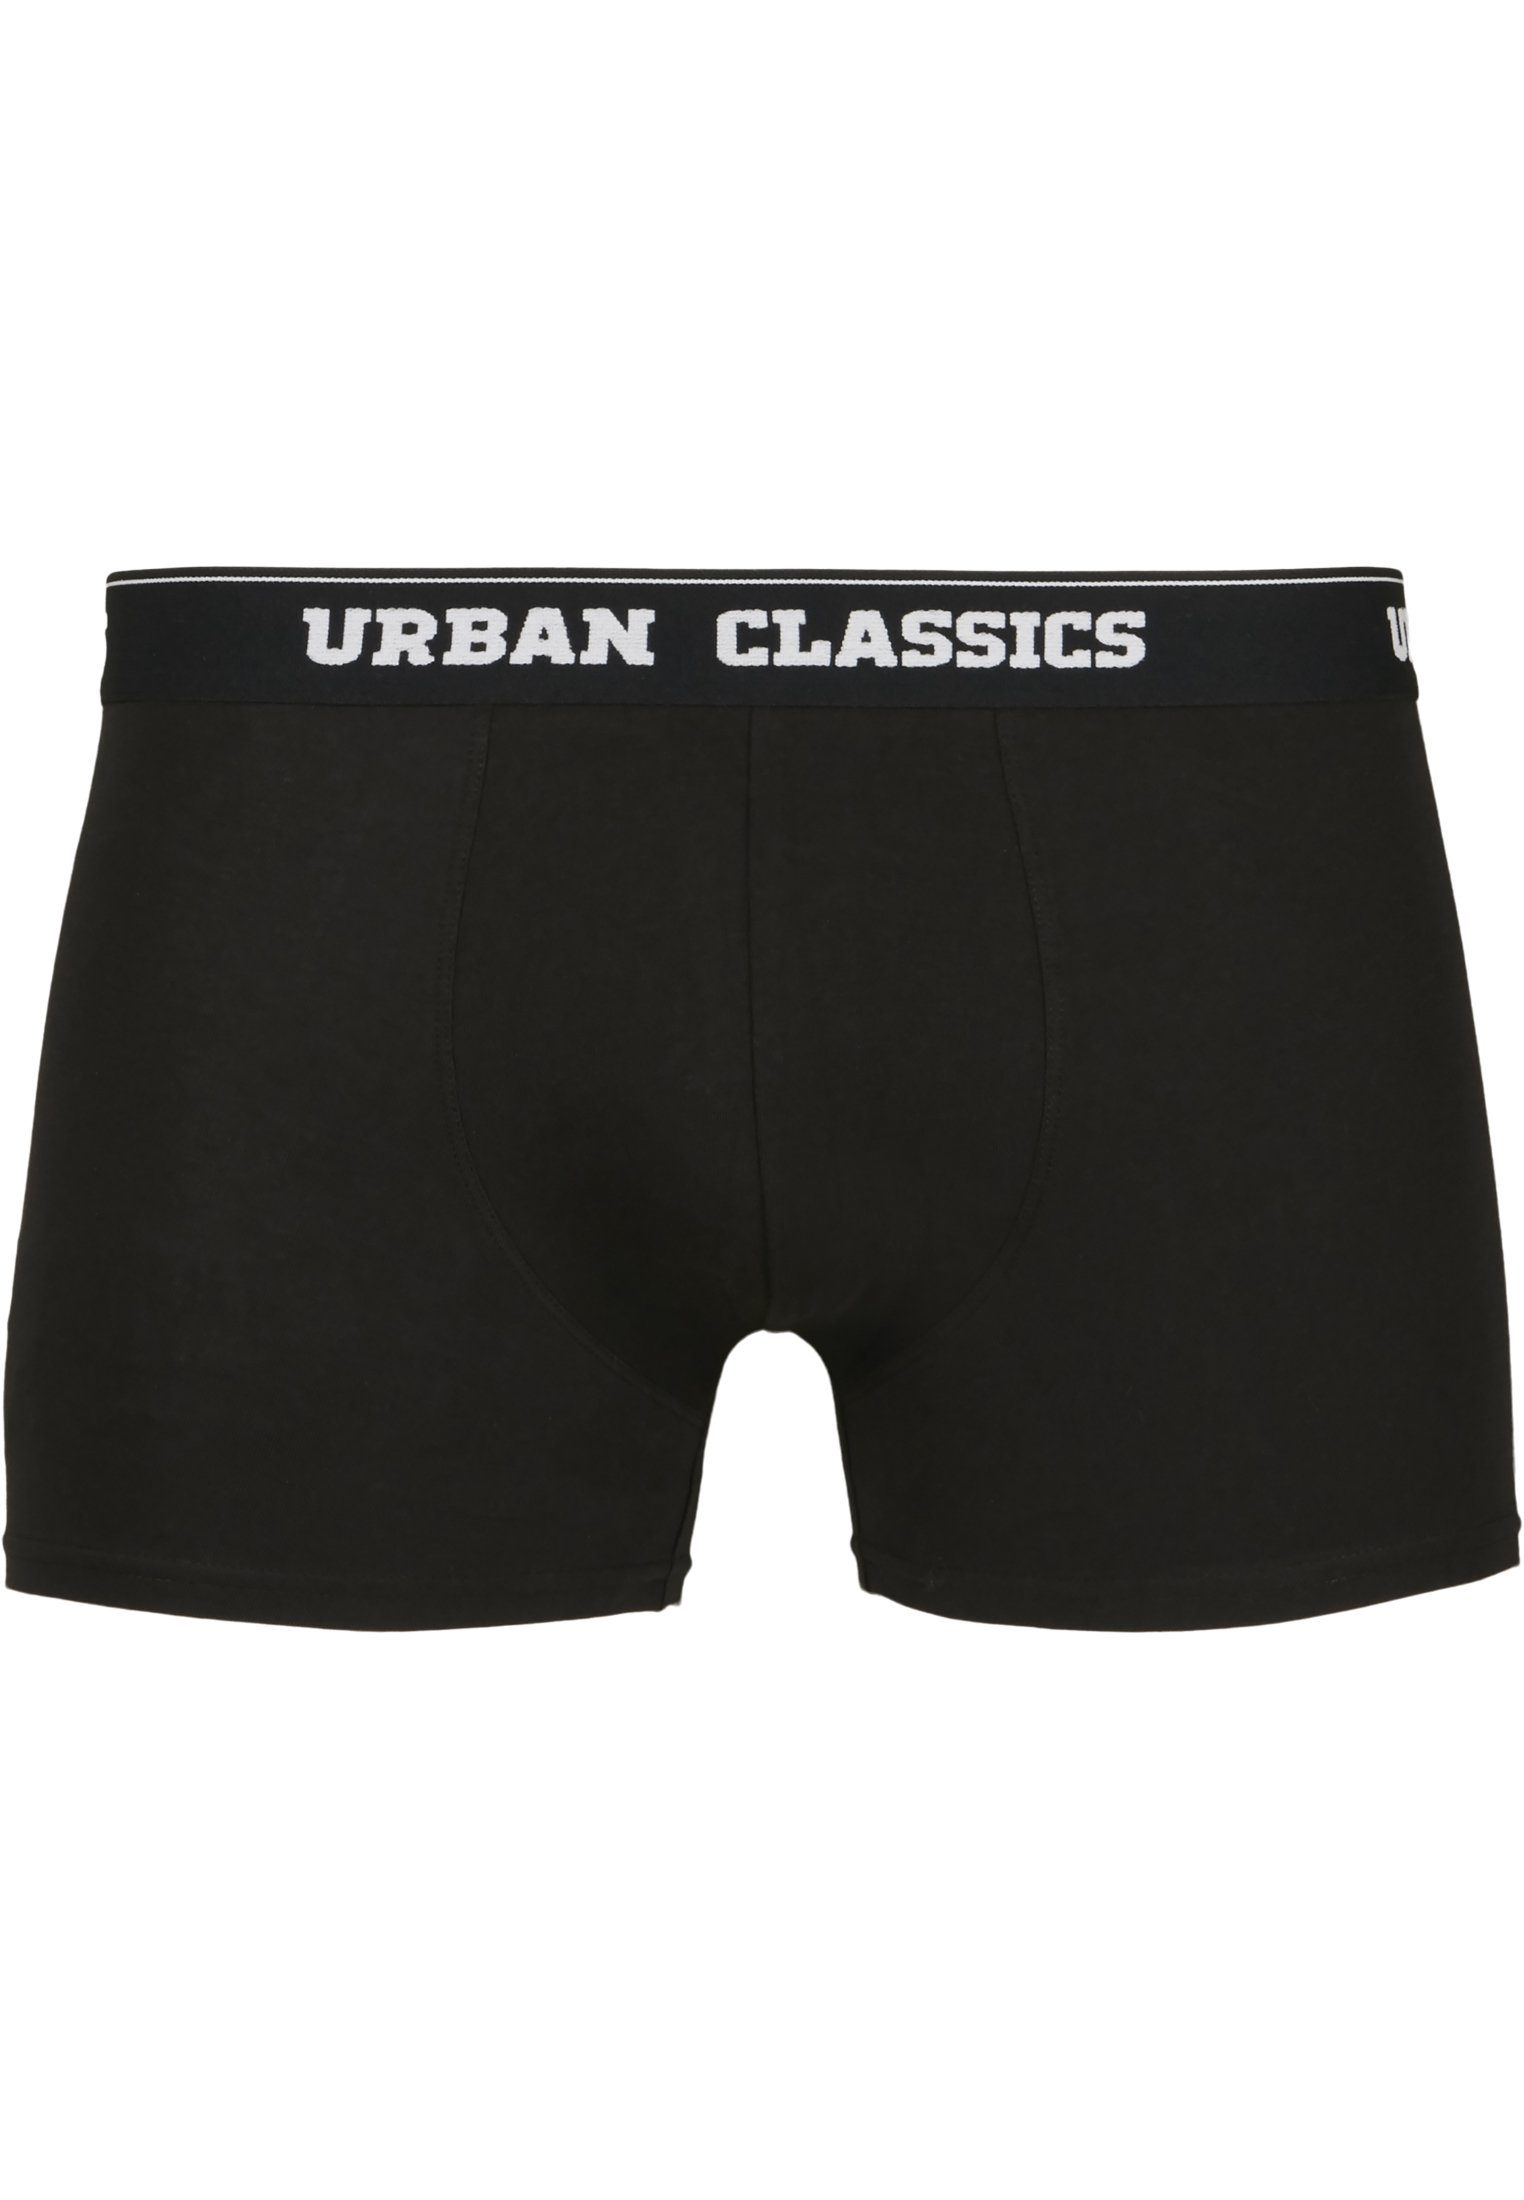 aop/black/charcoal URBAN (1-St) Shorts anchor Boxershorts 5-Pack Boxer CLASSICS Herren